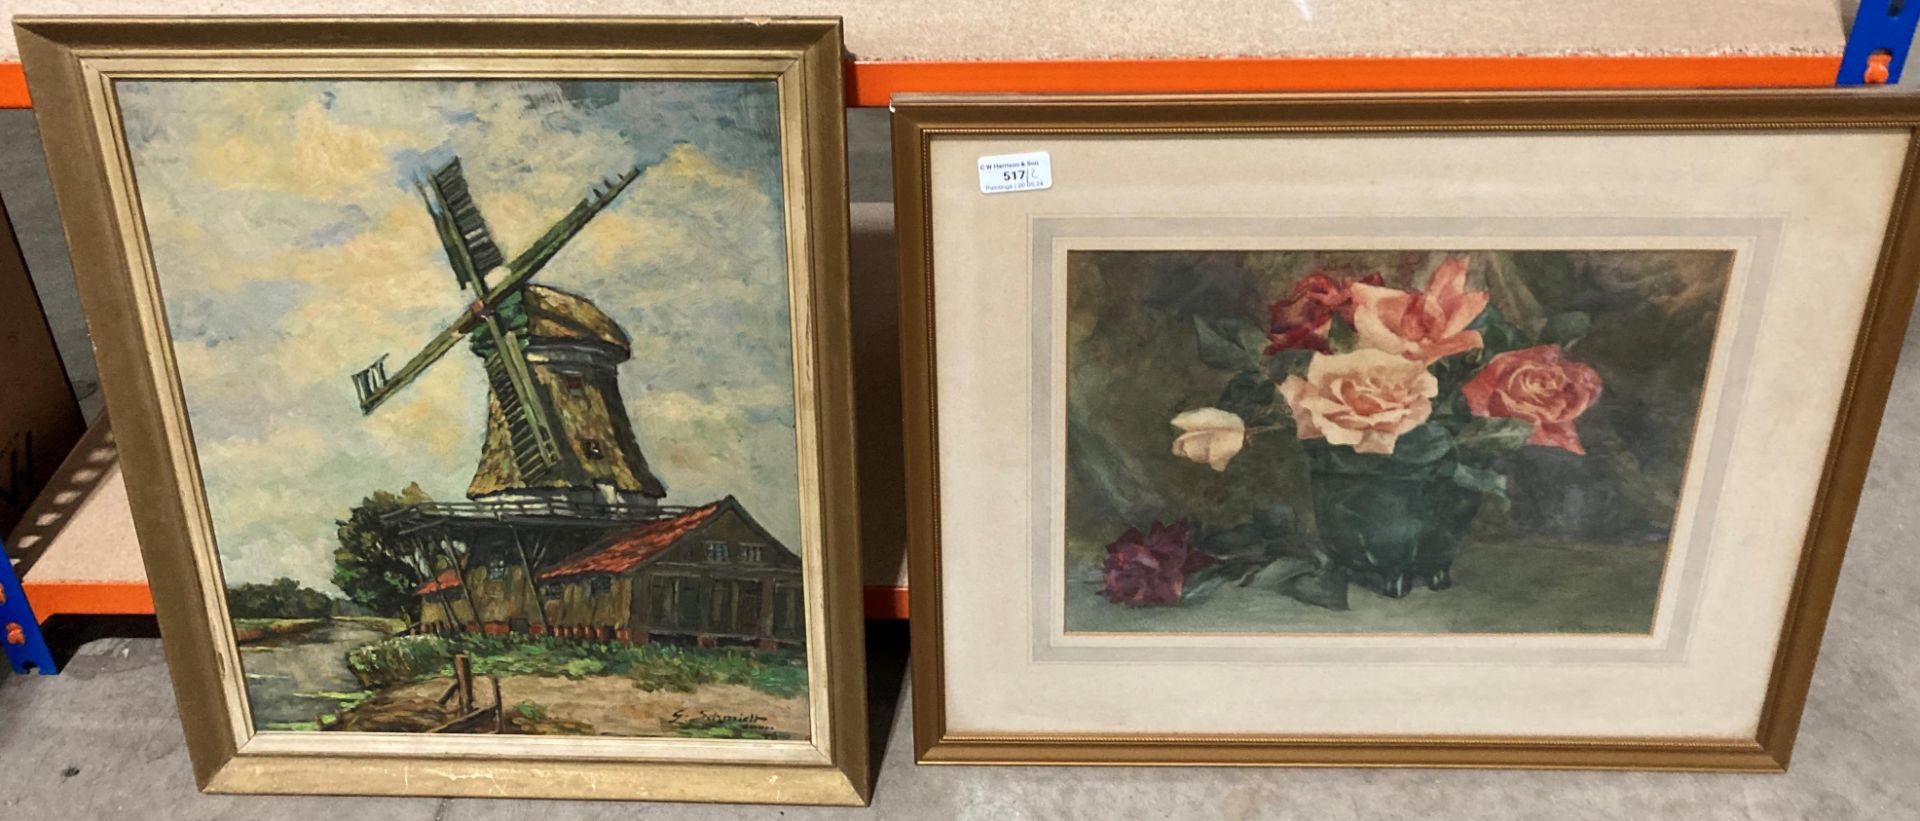 G Schmidt framed oil painting of a windmill 43cm x 35cm and E G Heddon framed watercolour 'Vase of